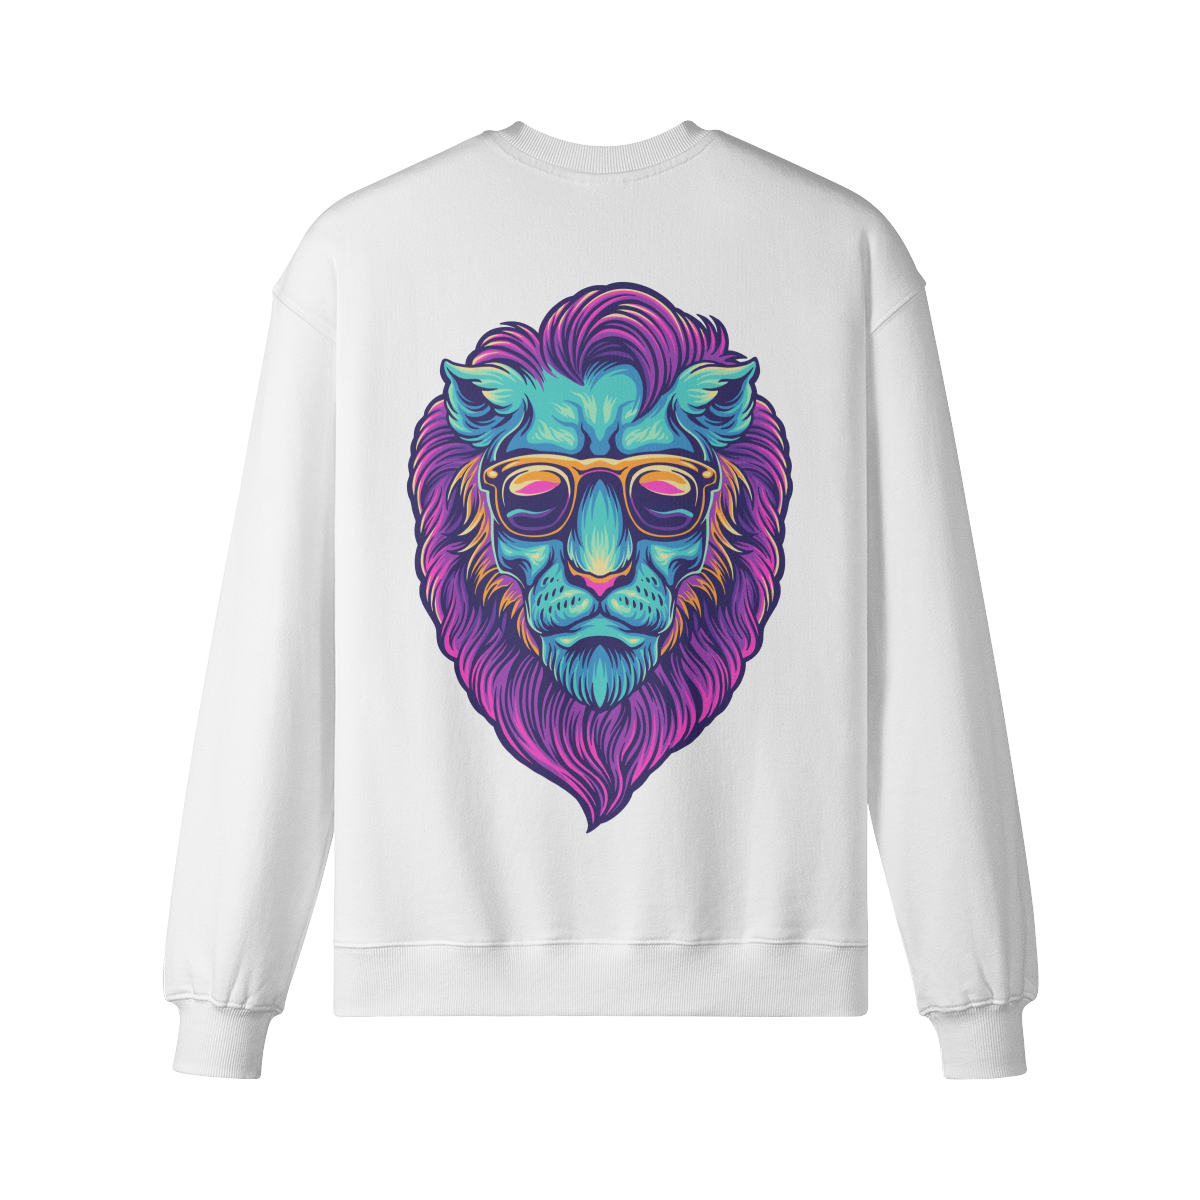 LION TRIP - Unisex Oversized Sweatshirt